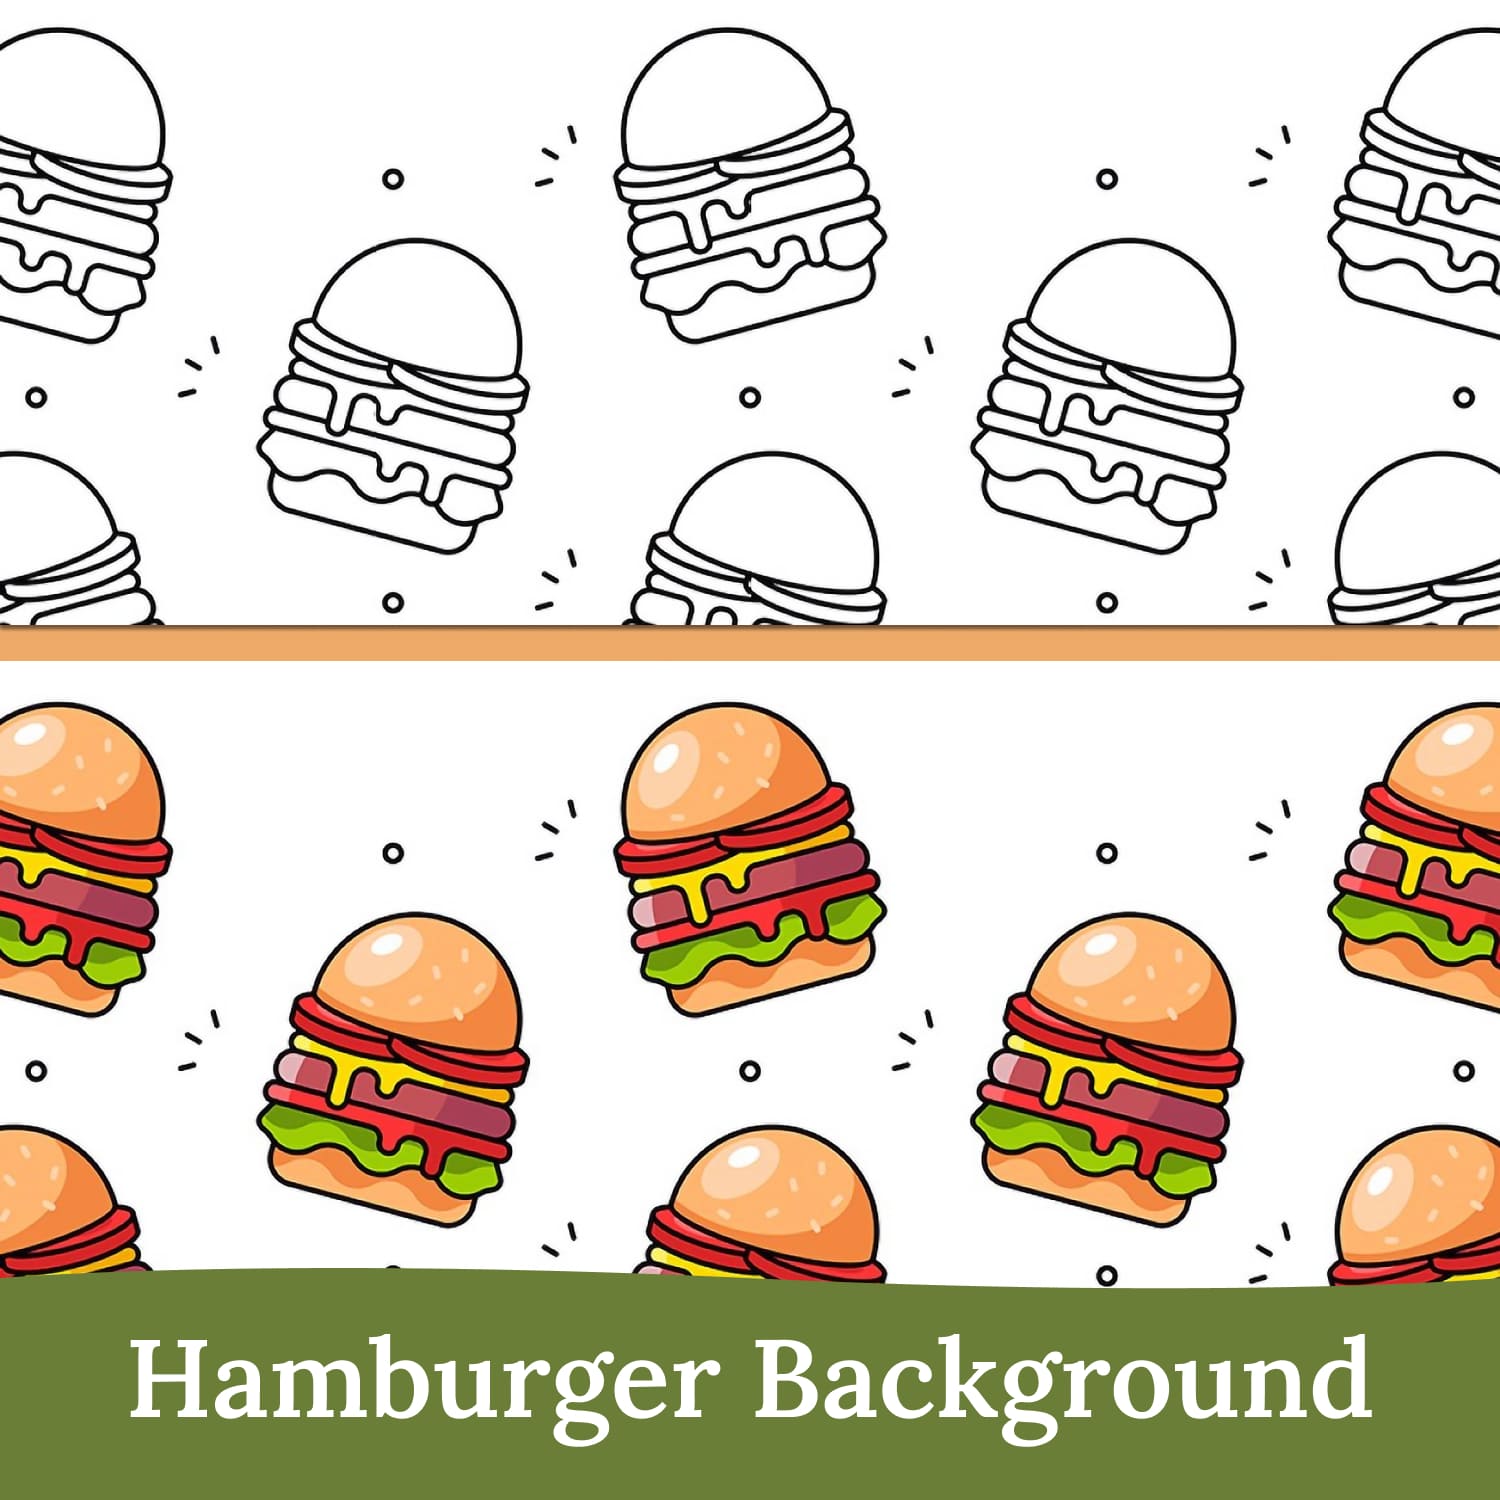 Hamburger background - main image preview.